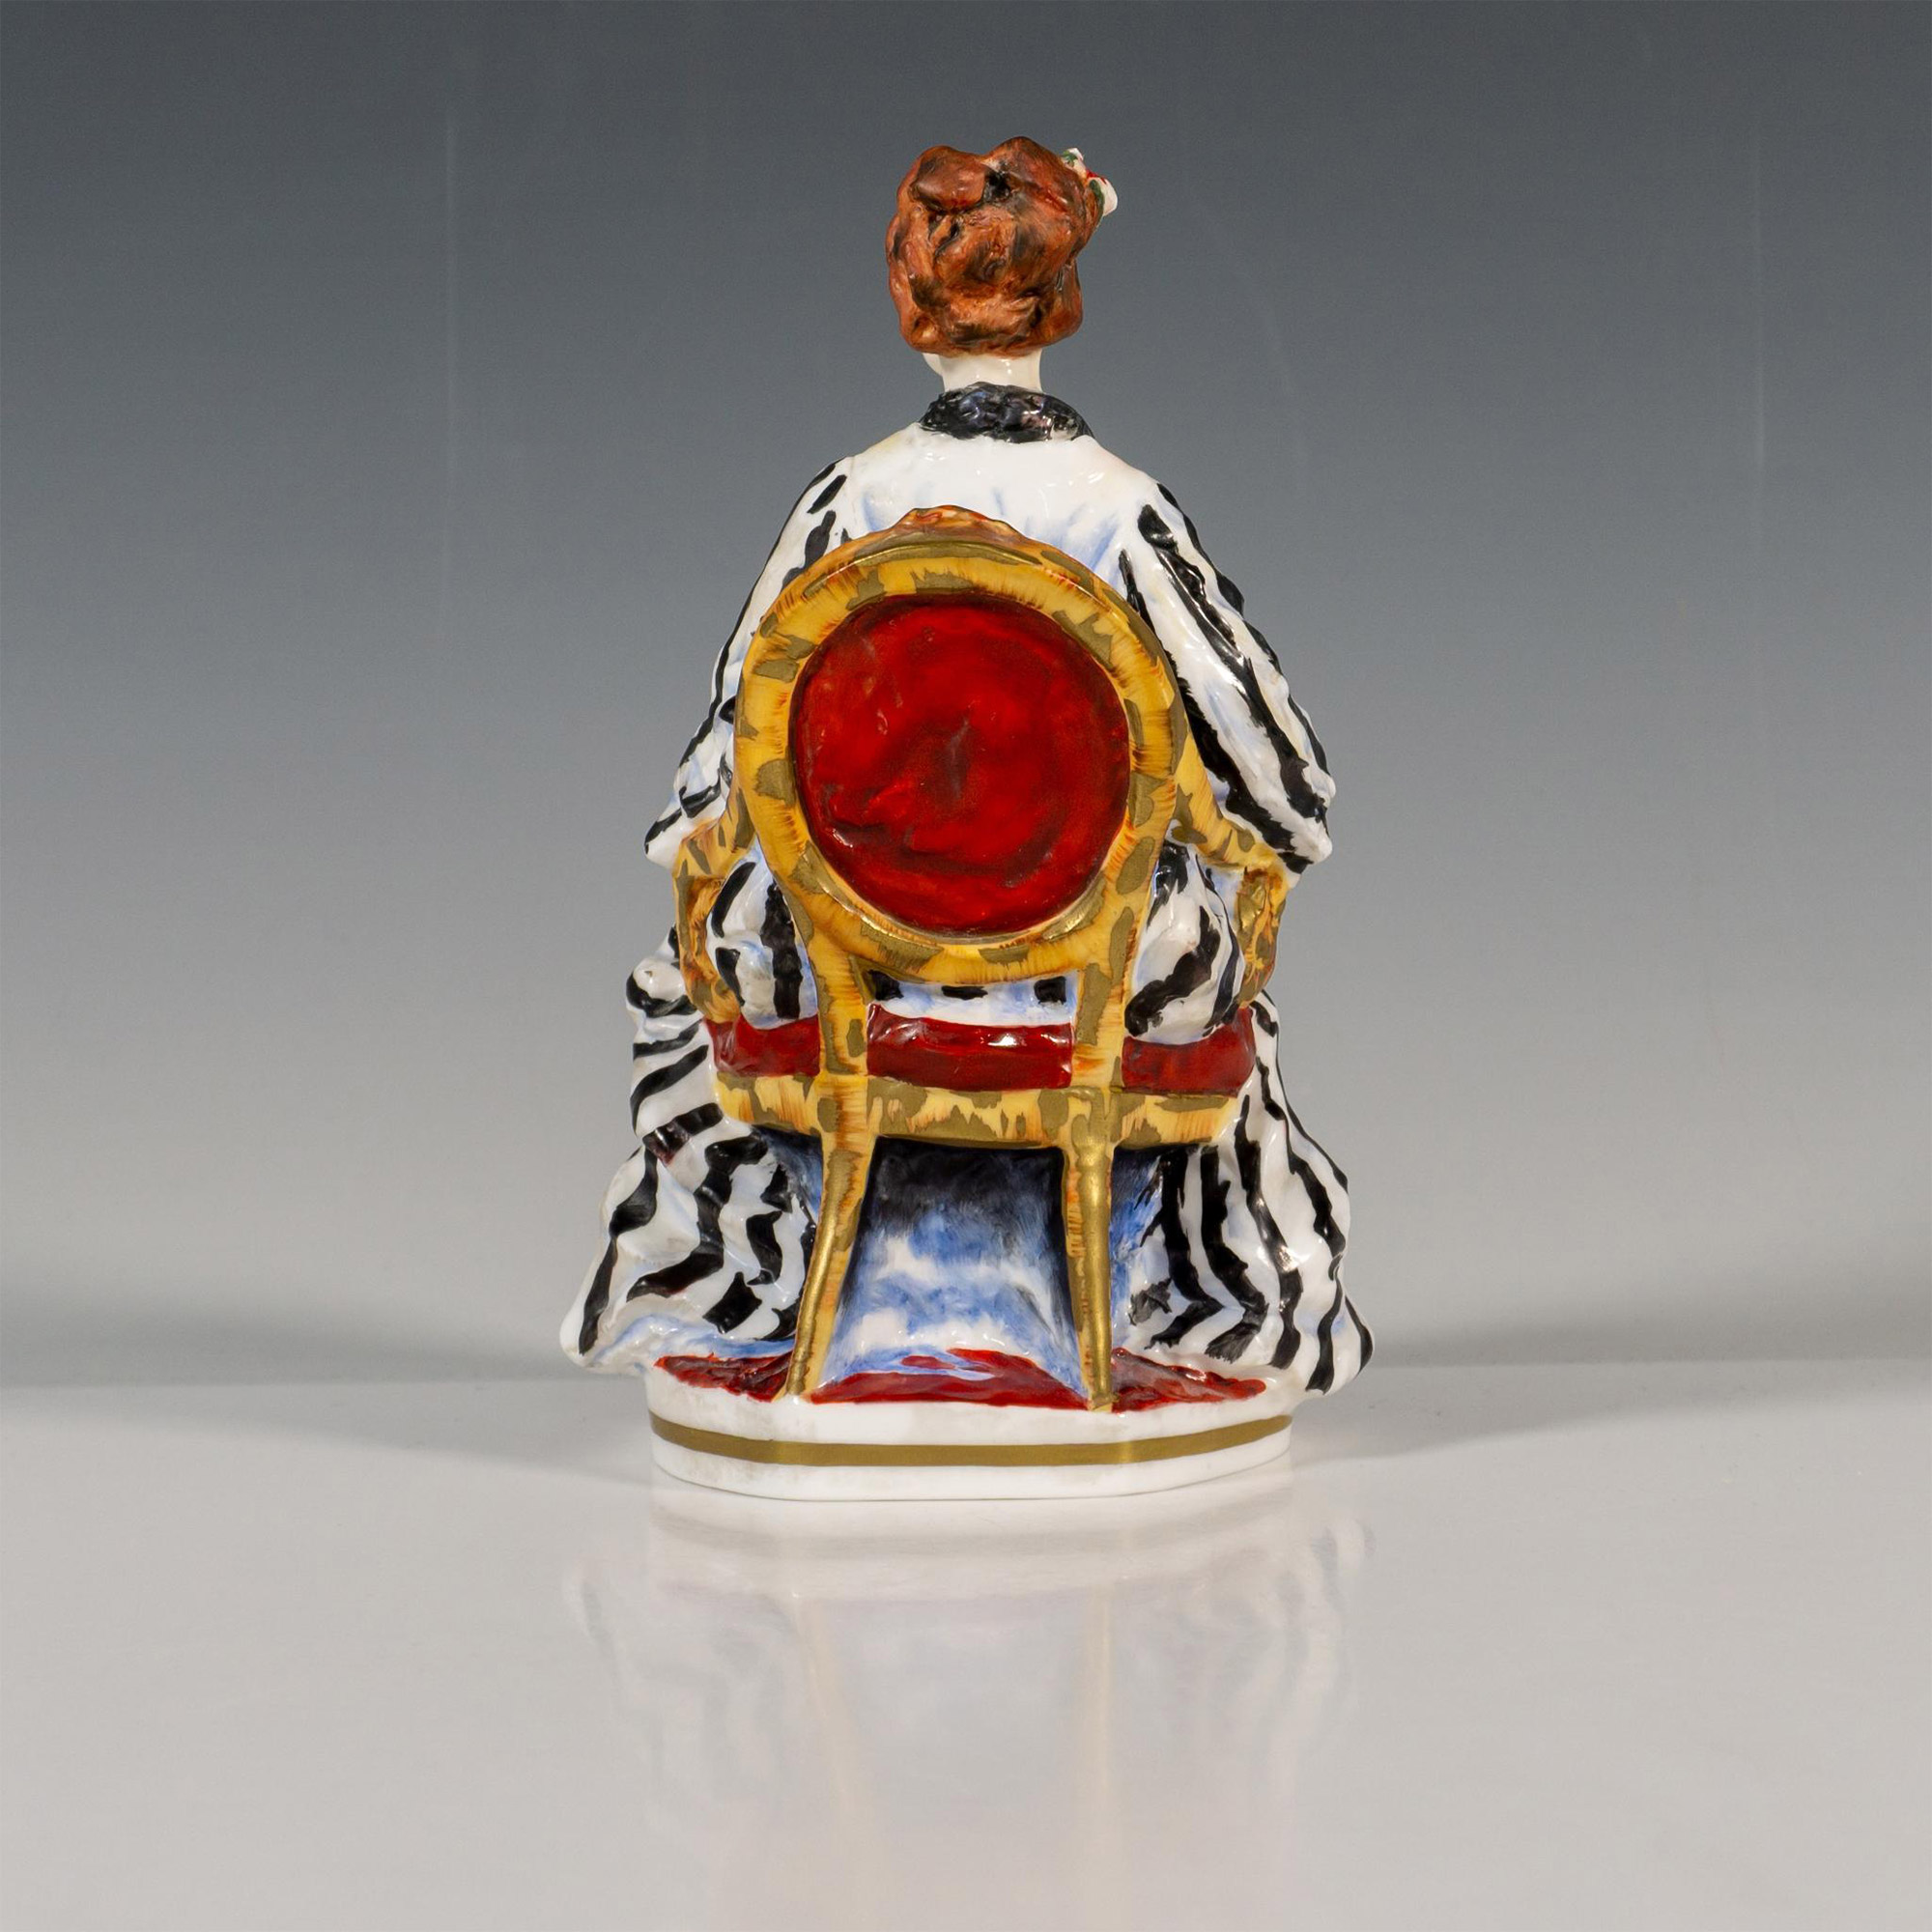 Royal Worcester Porcelain Figurine, Nini - Image 2 of 3